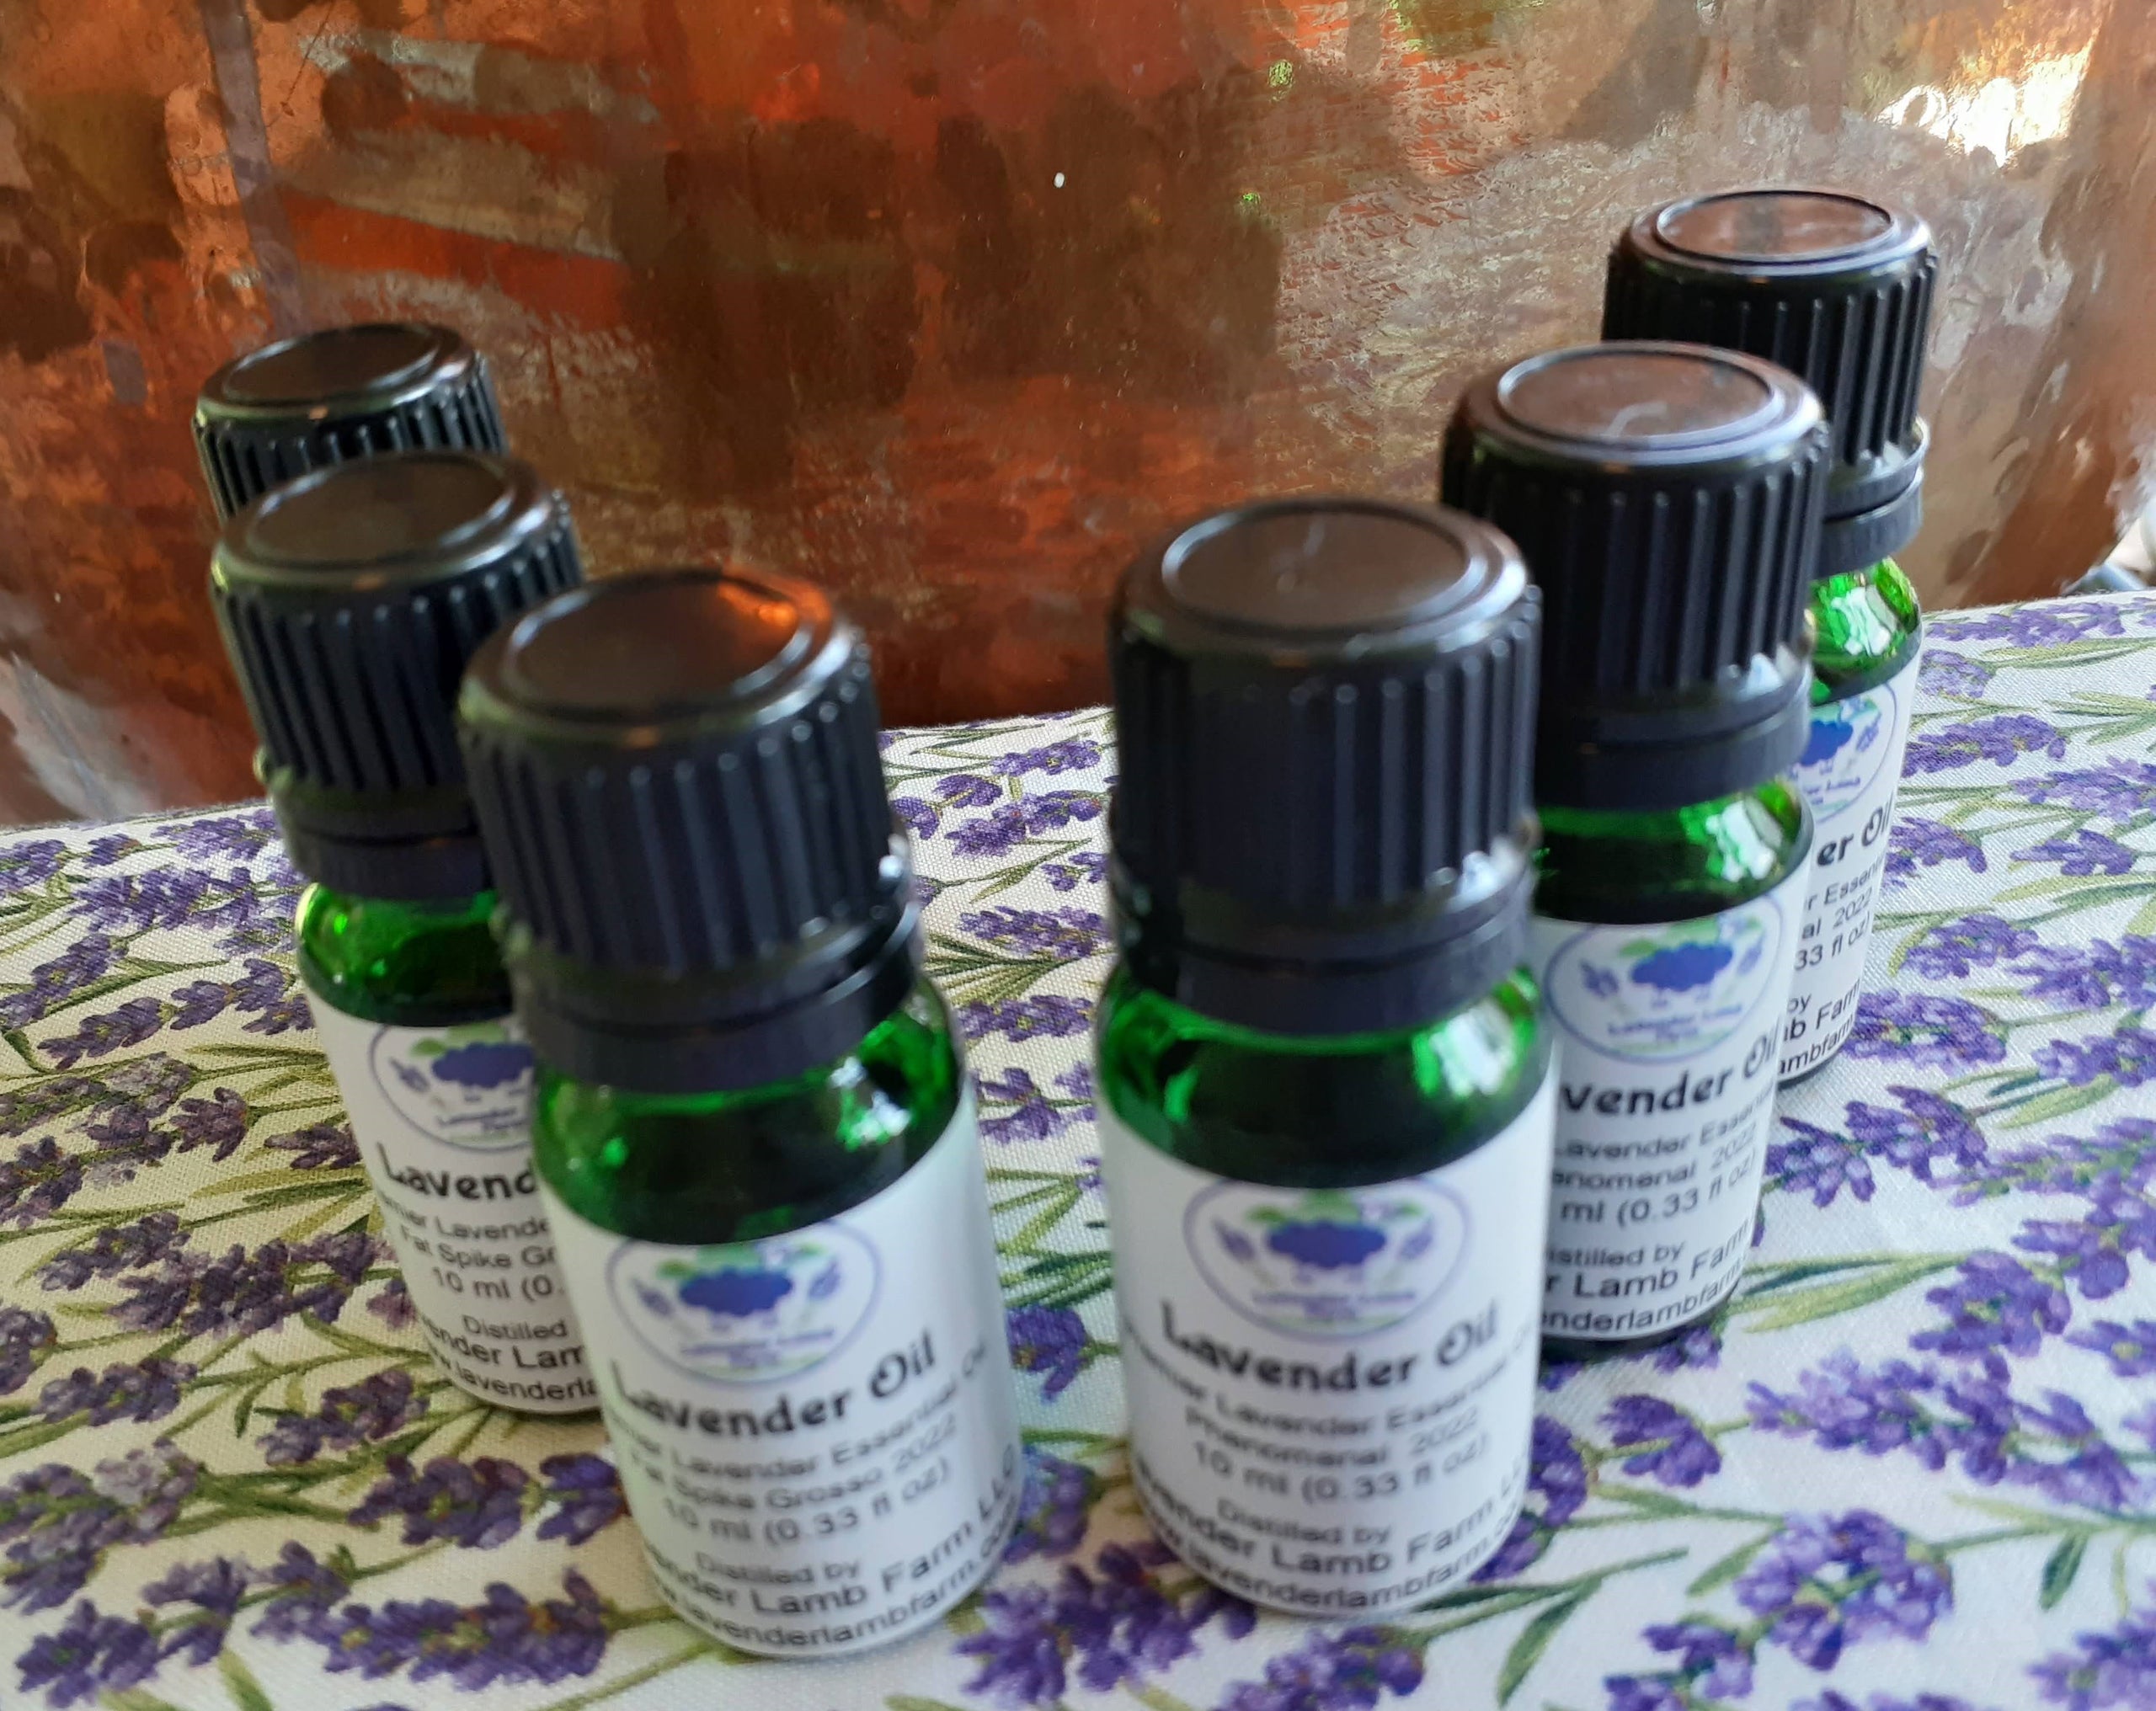 Lavender Essential Oil 10 ml –